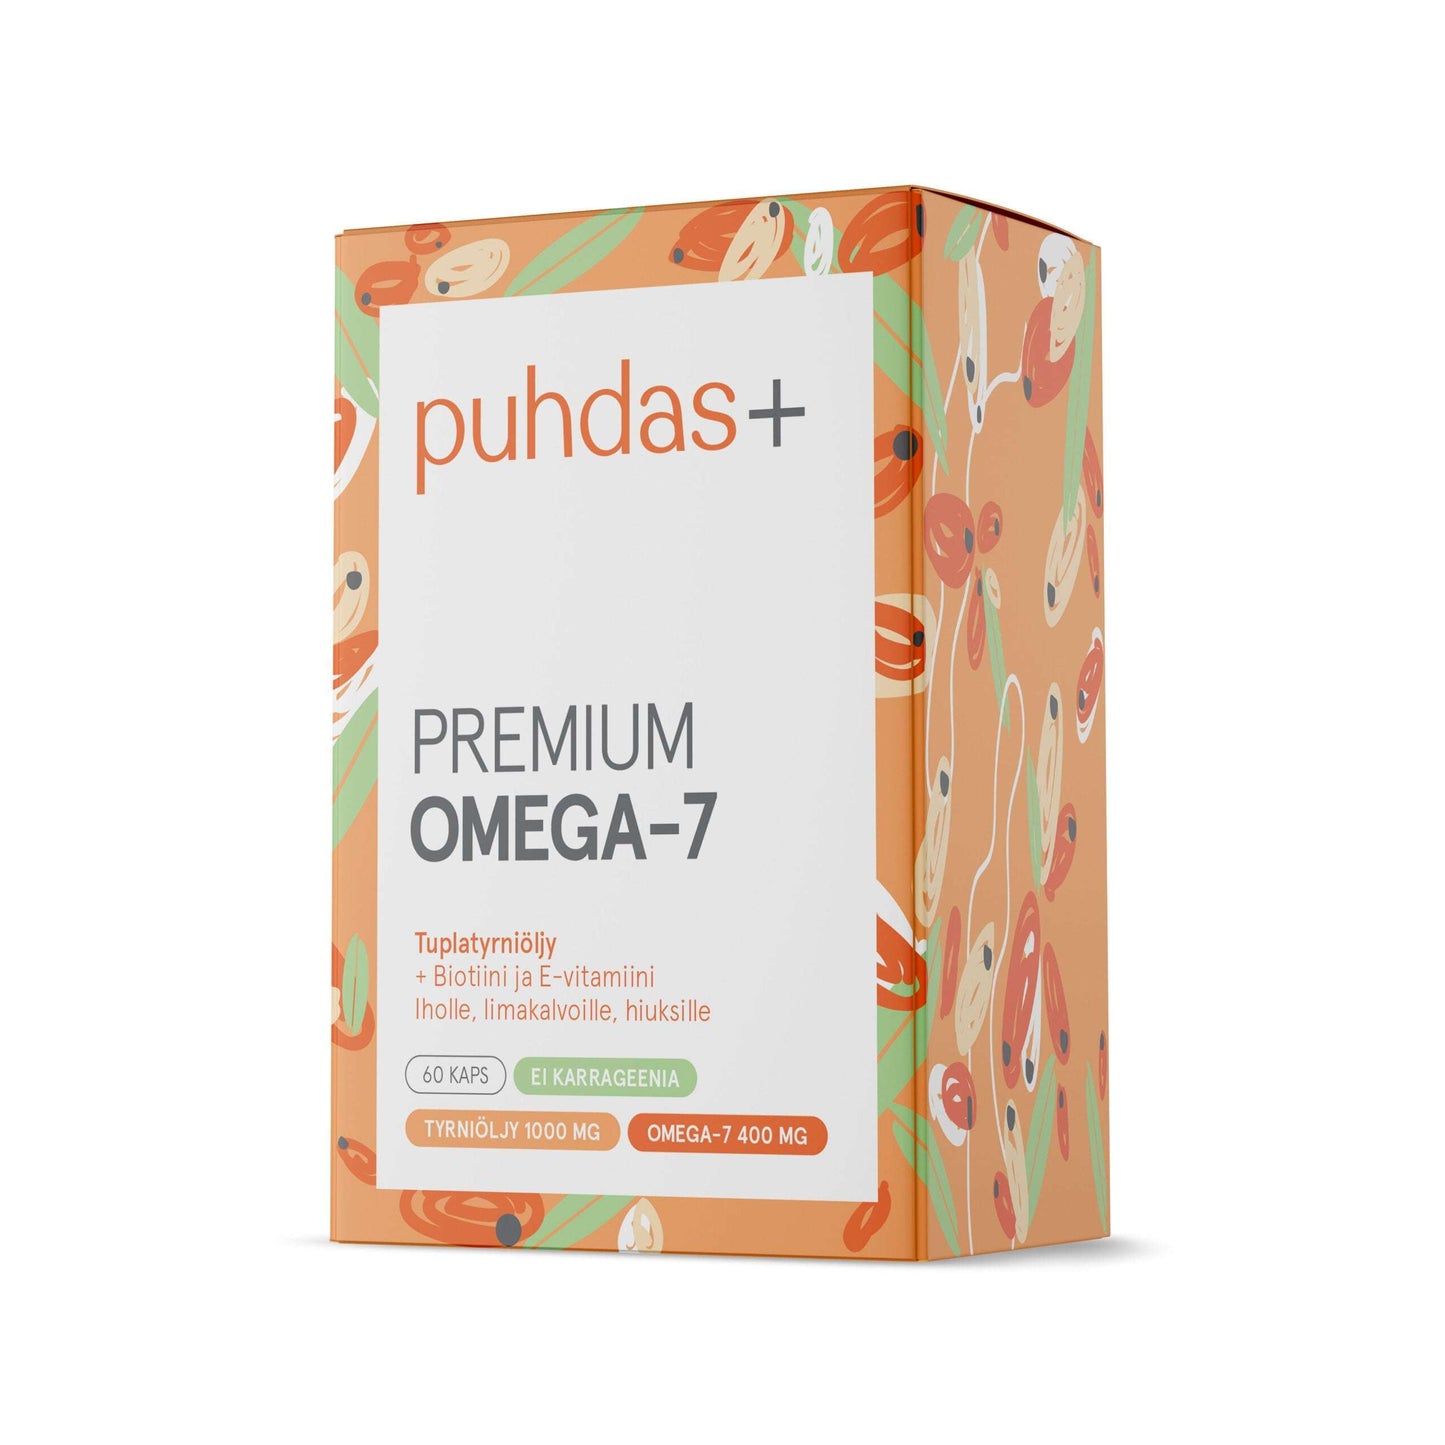 Puhdas+ Premium Omega-7-Puhdas+-Hyvinvoinnin Tavaratalo